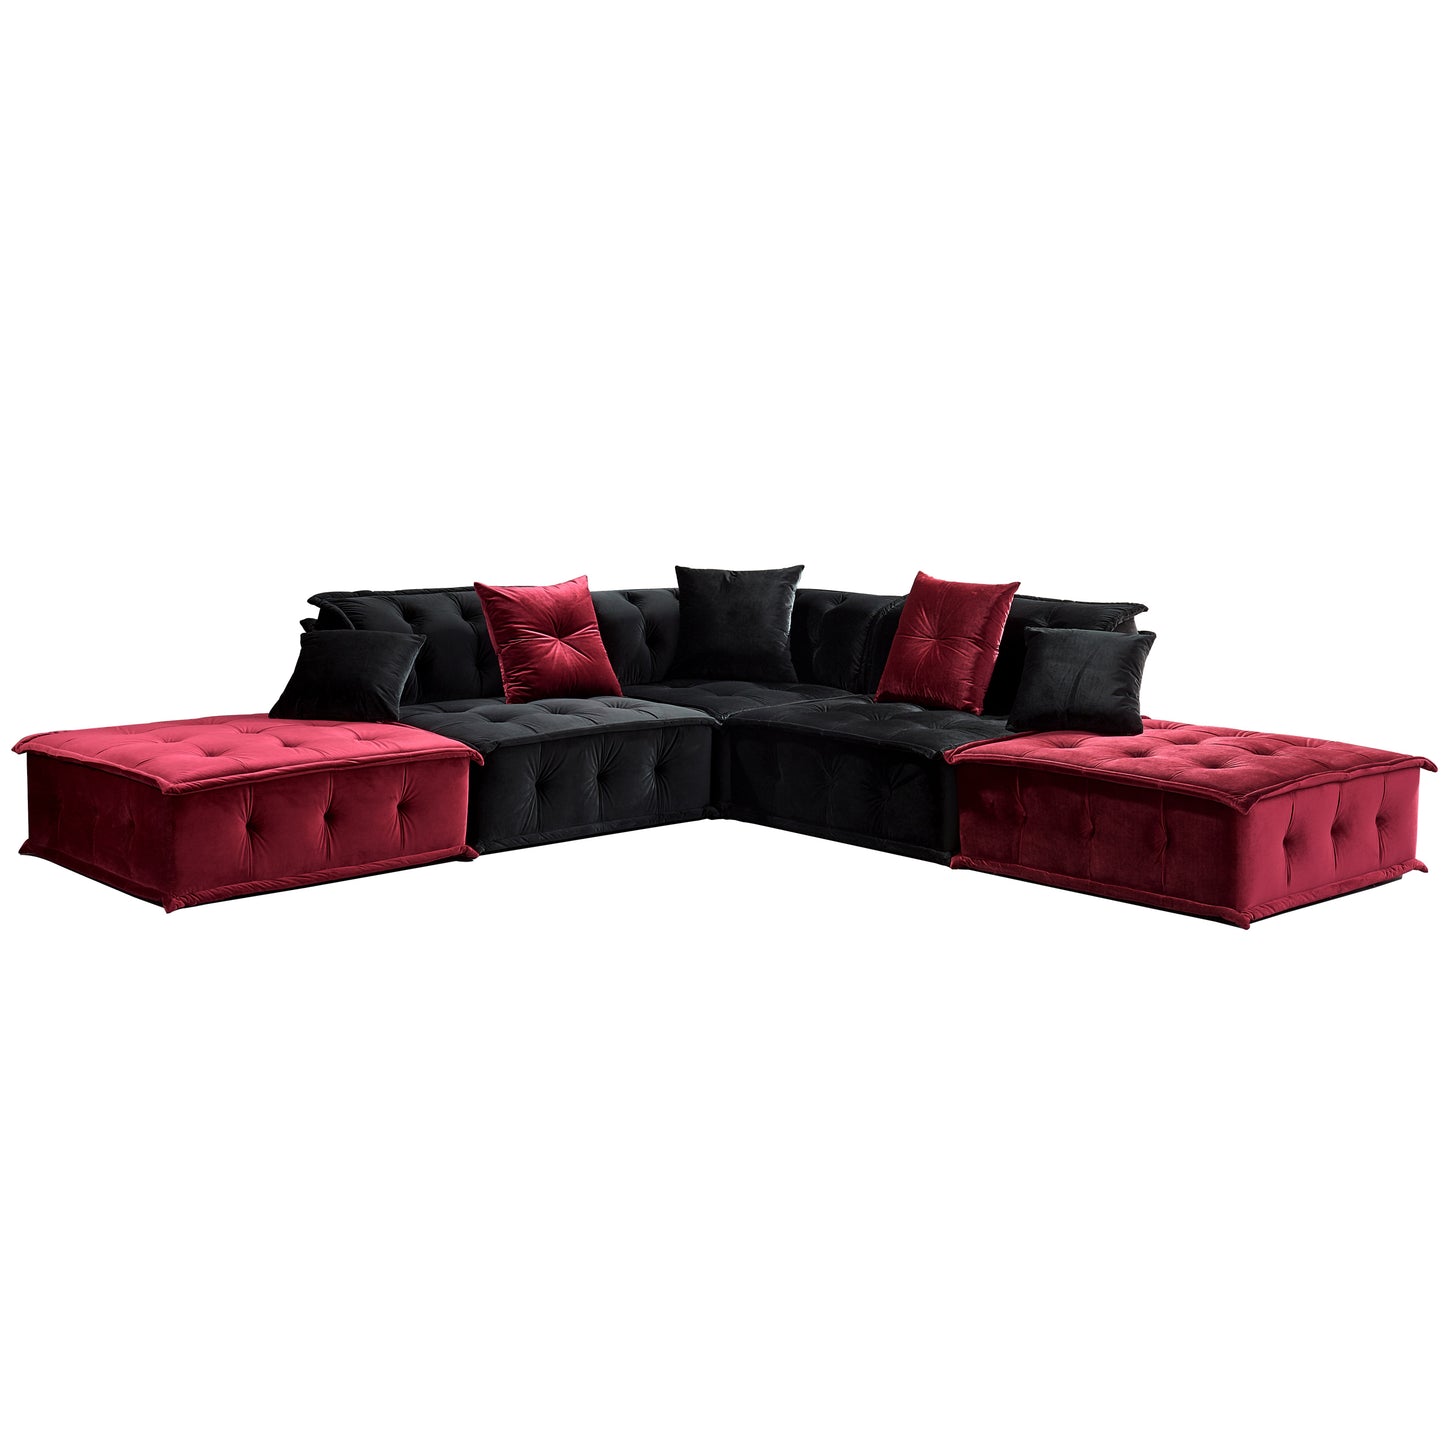 Fabric Modular Sectional Sofa, Contemporary Velvet Divani Casa, Living Room Couch (Black & Red)